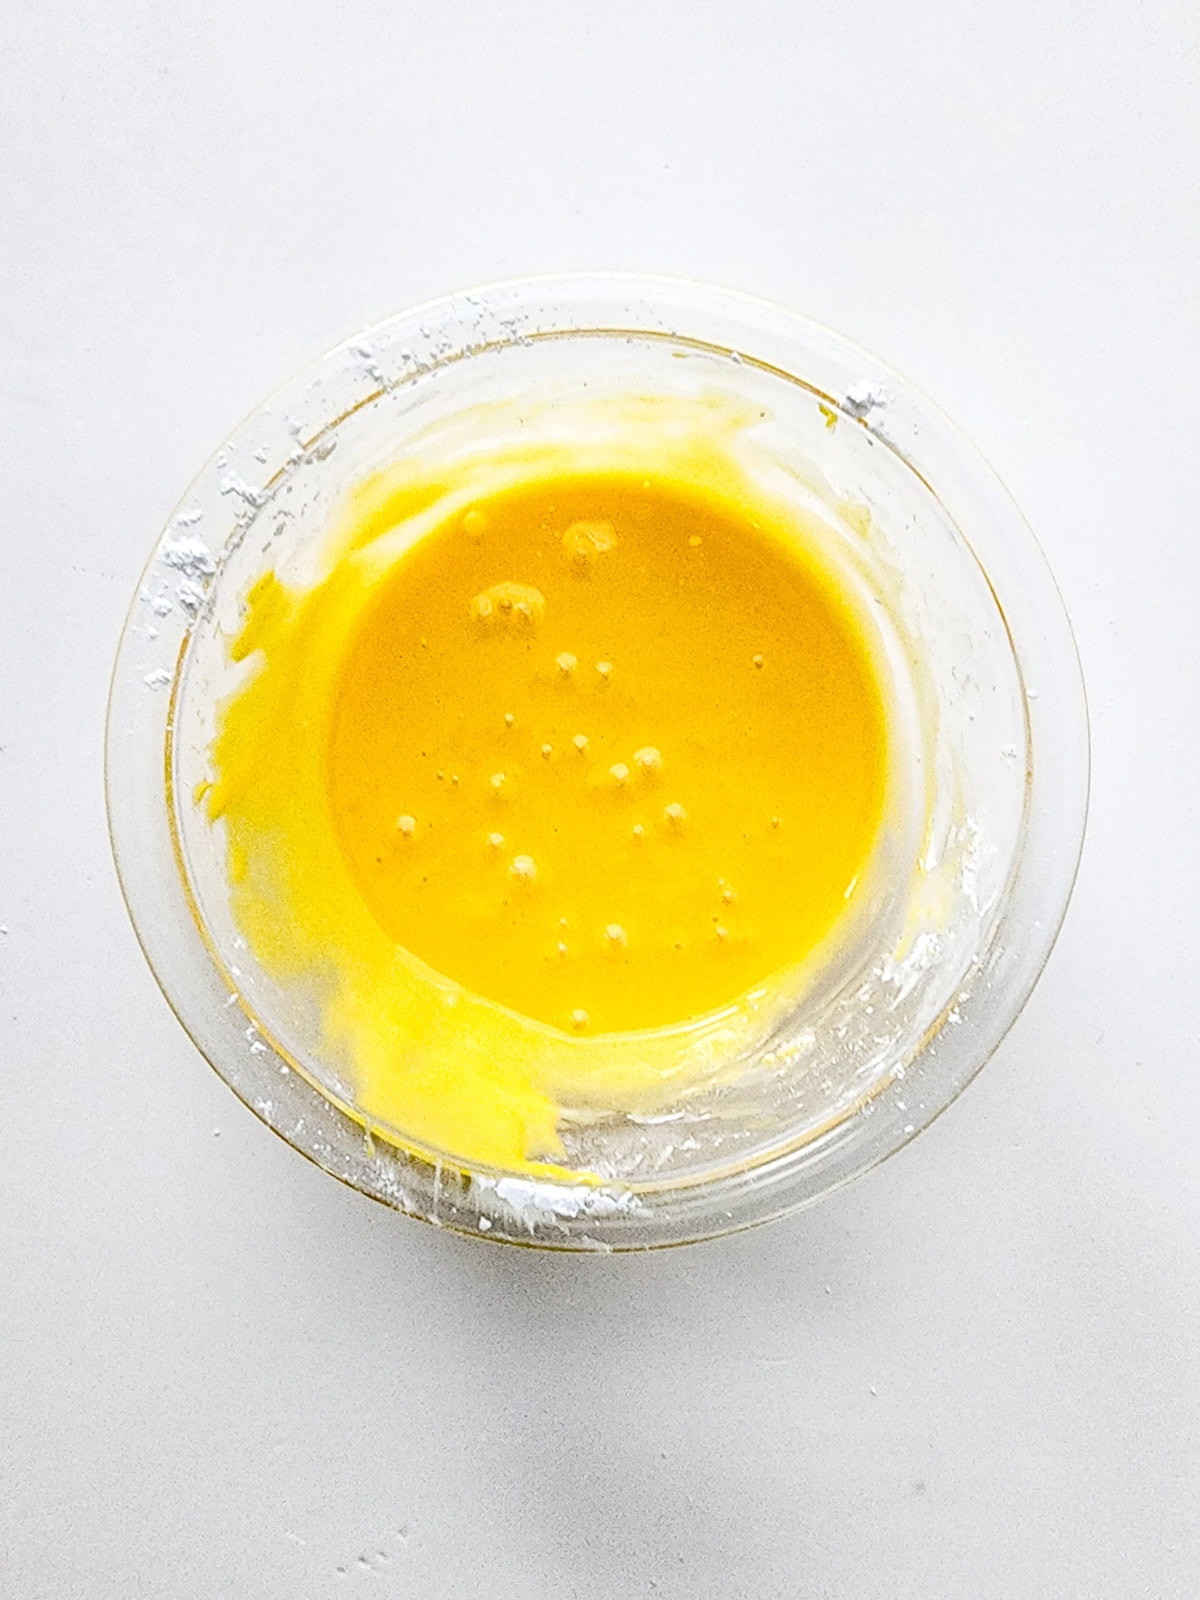 Powdered sugar and lemon juice mixed with food coloring